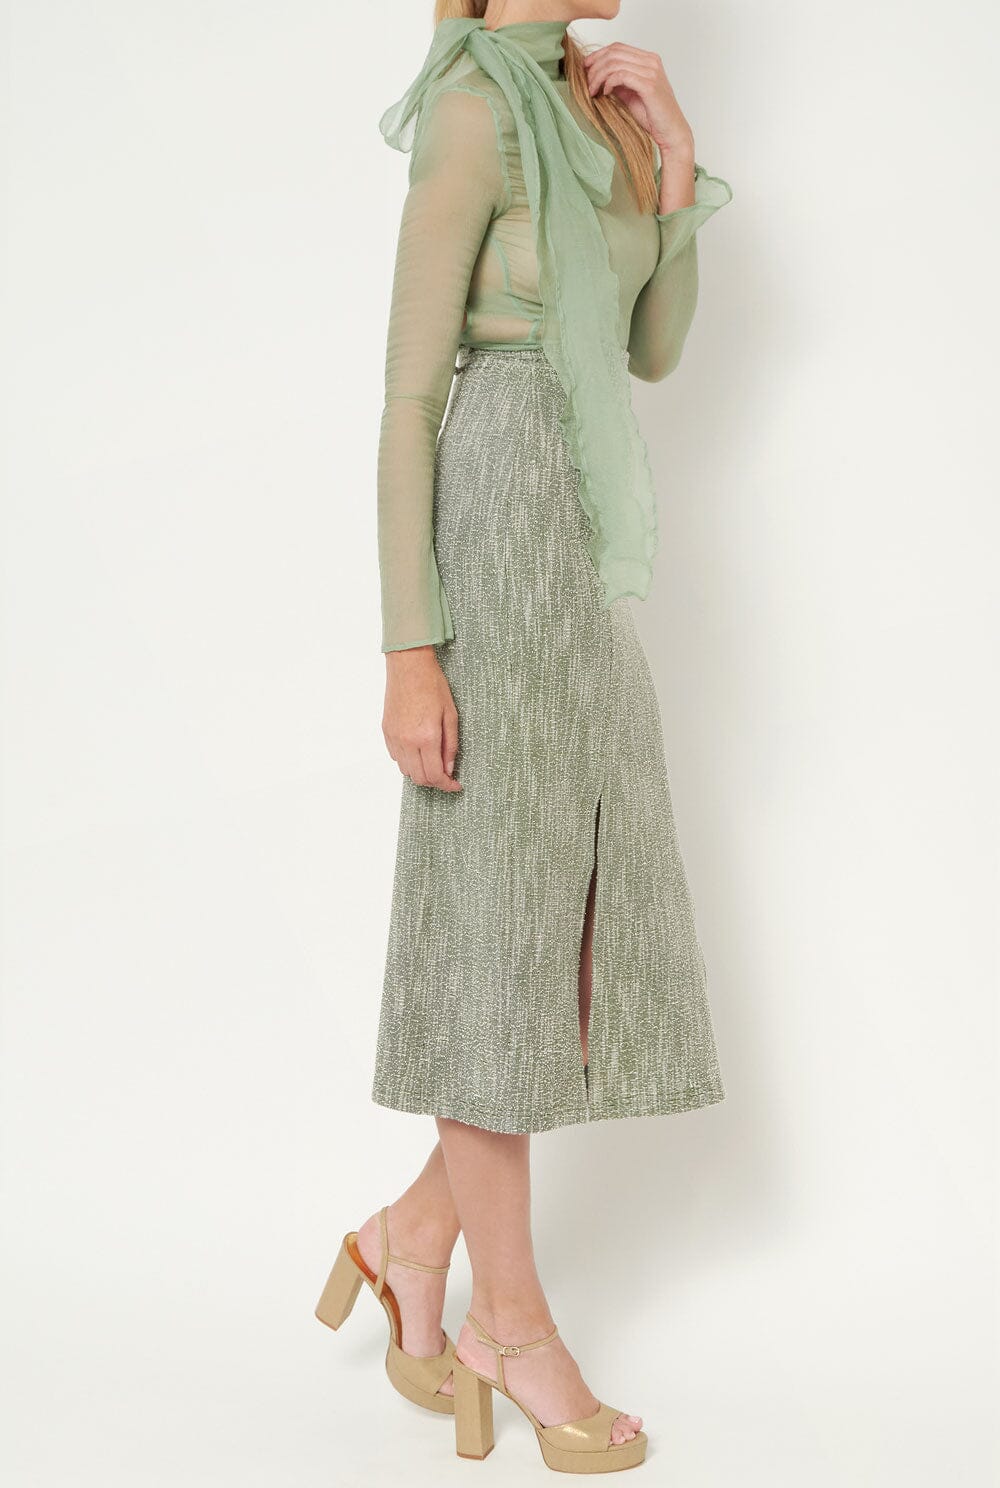 Soft Green Knit skirt Skirts Habey Club 